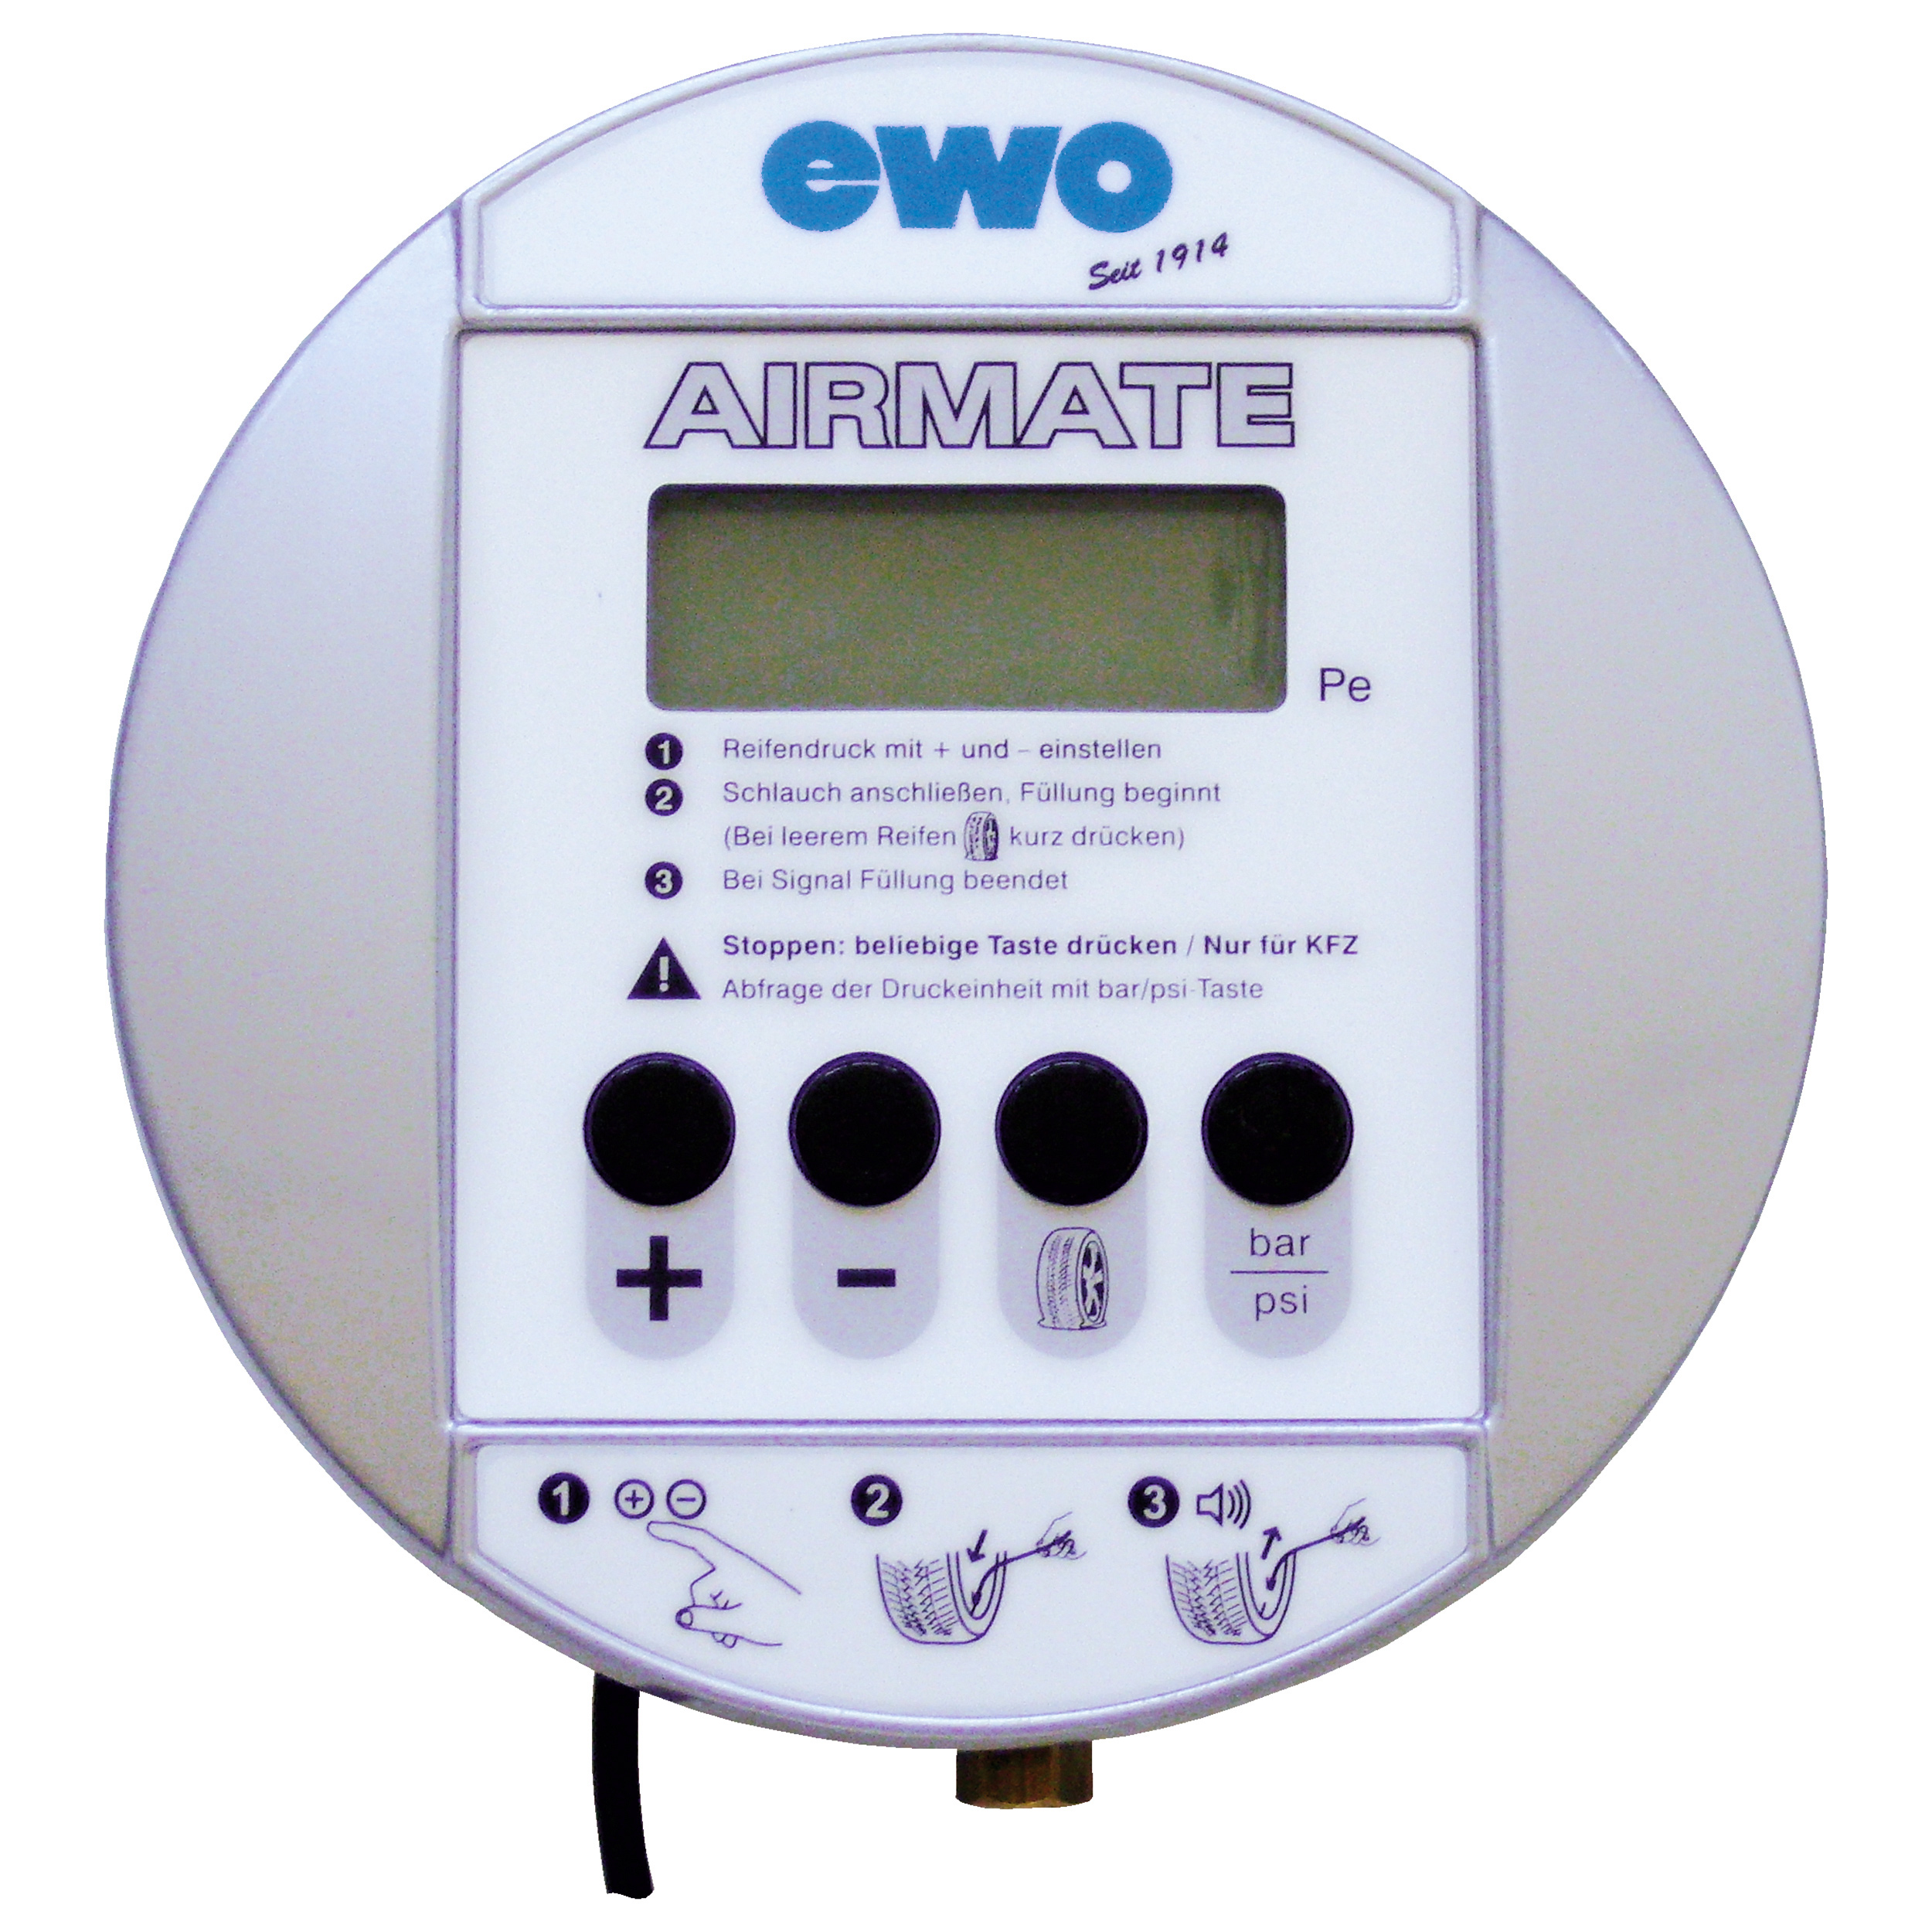 Digitaler Reifenfüllautomat airmate / pneumate